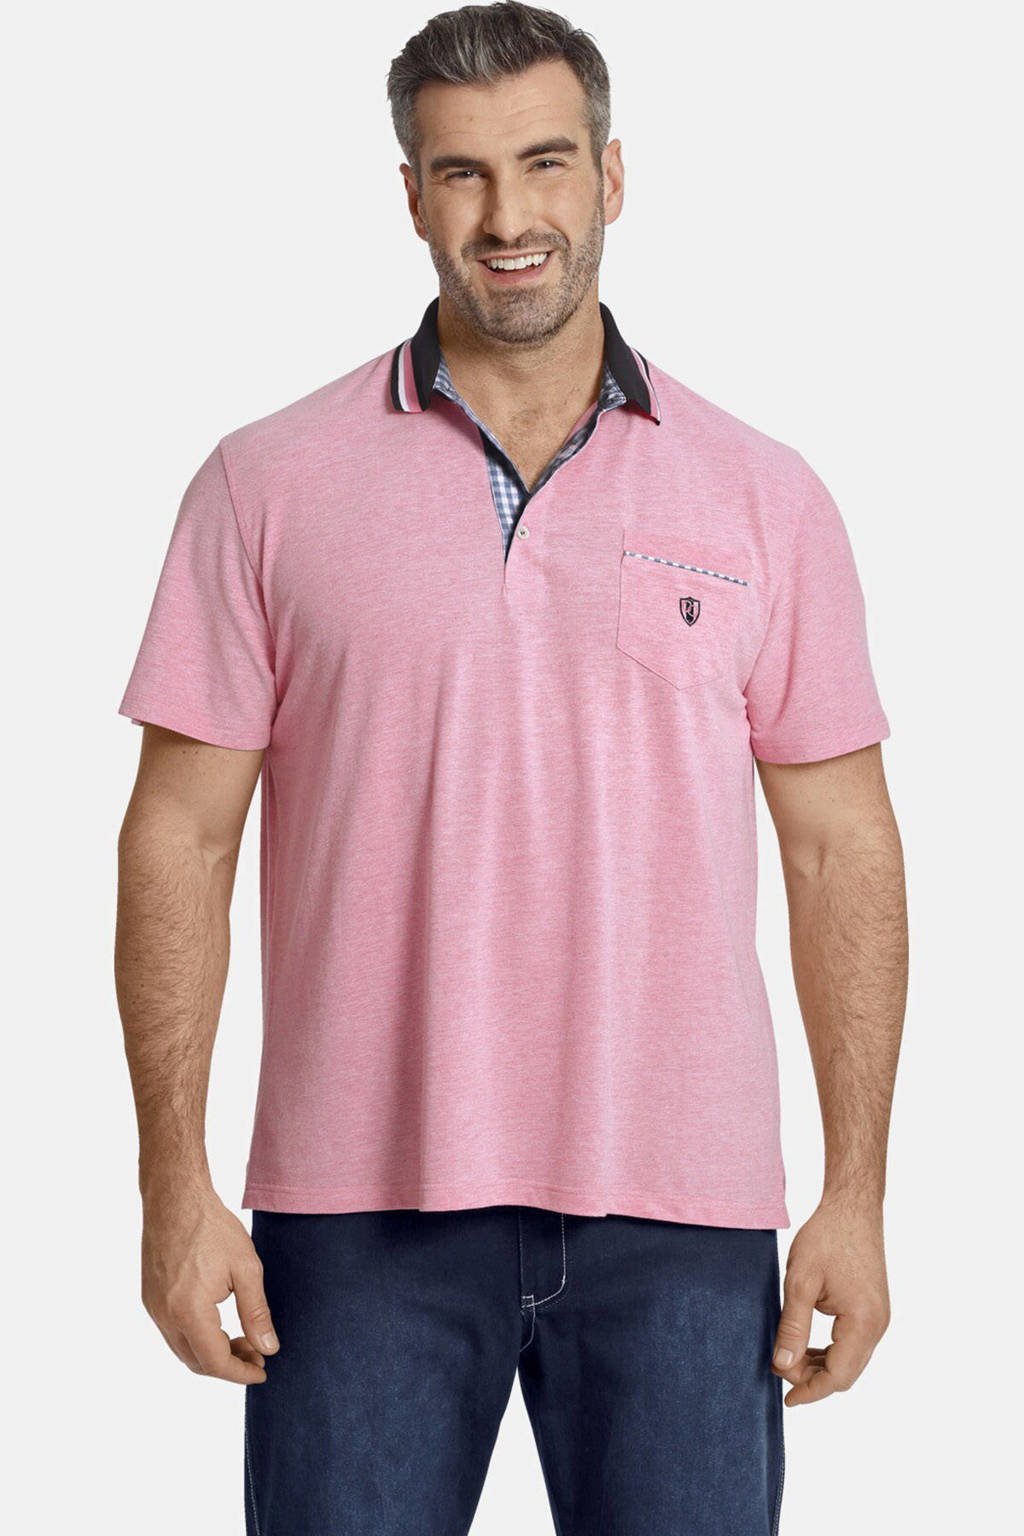 Charles Colby oversized polo EARL ZEON Plus Size met logo roze, Roze